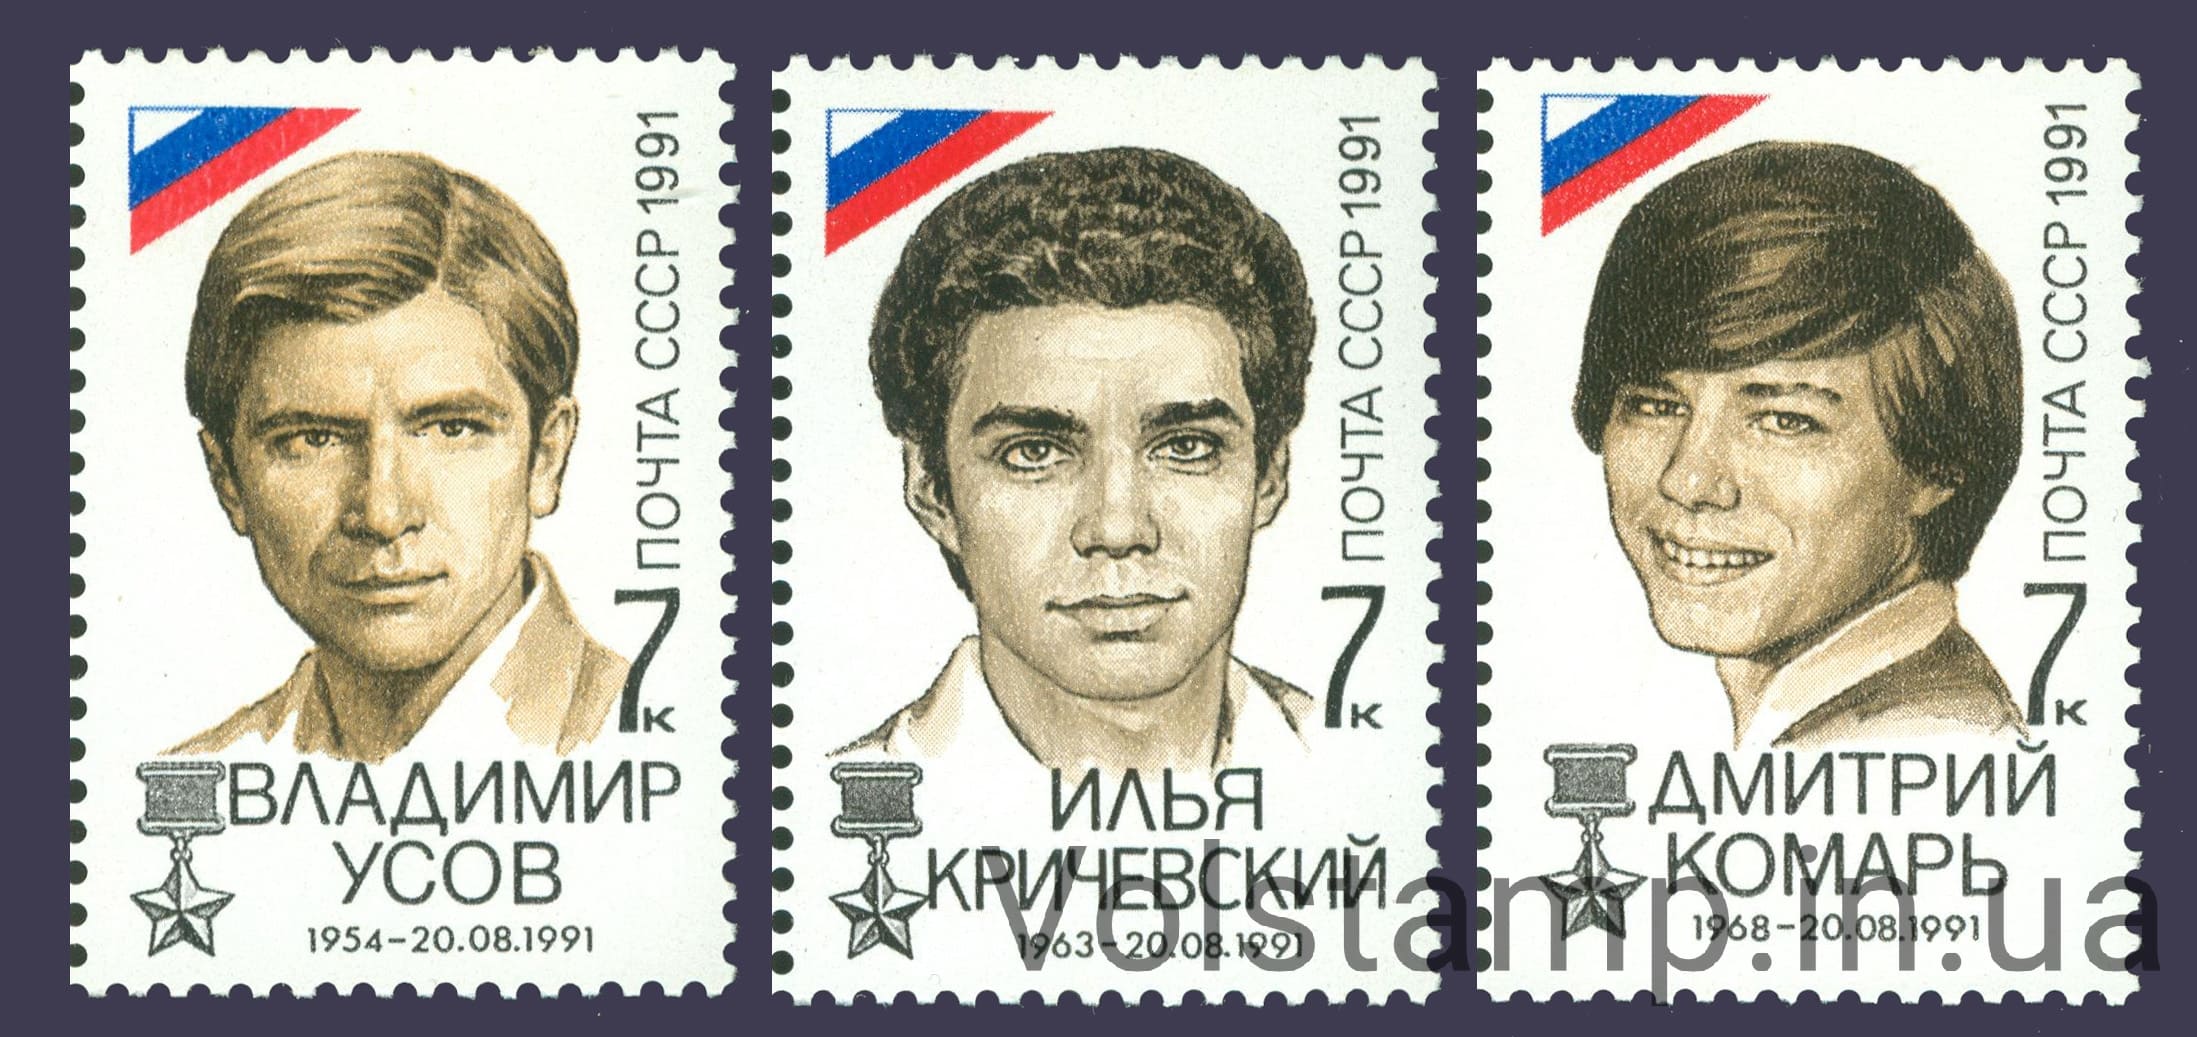 1991 серия марок Победа демократических сил 21 августа 1991 года №6302-6304